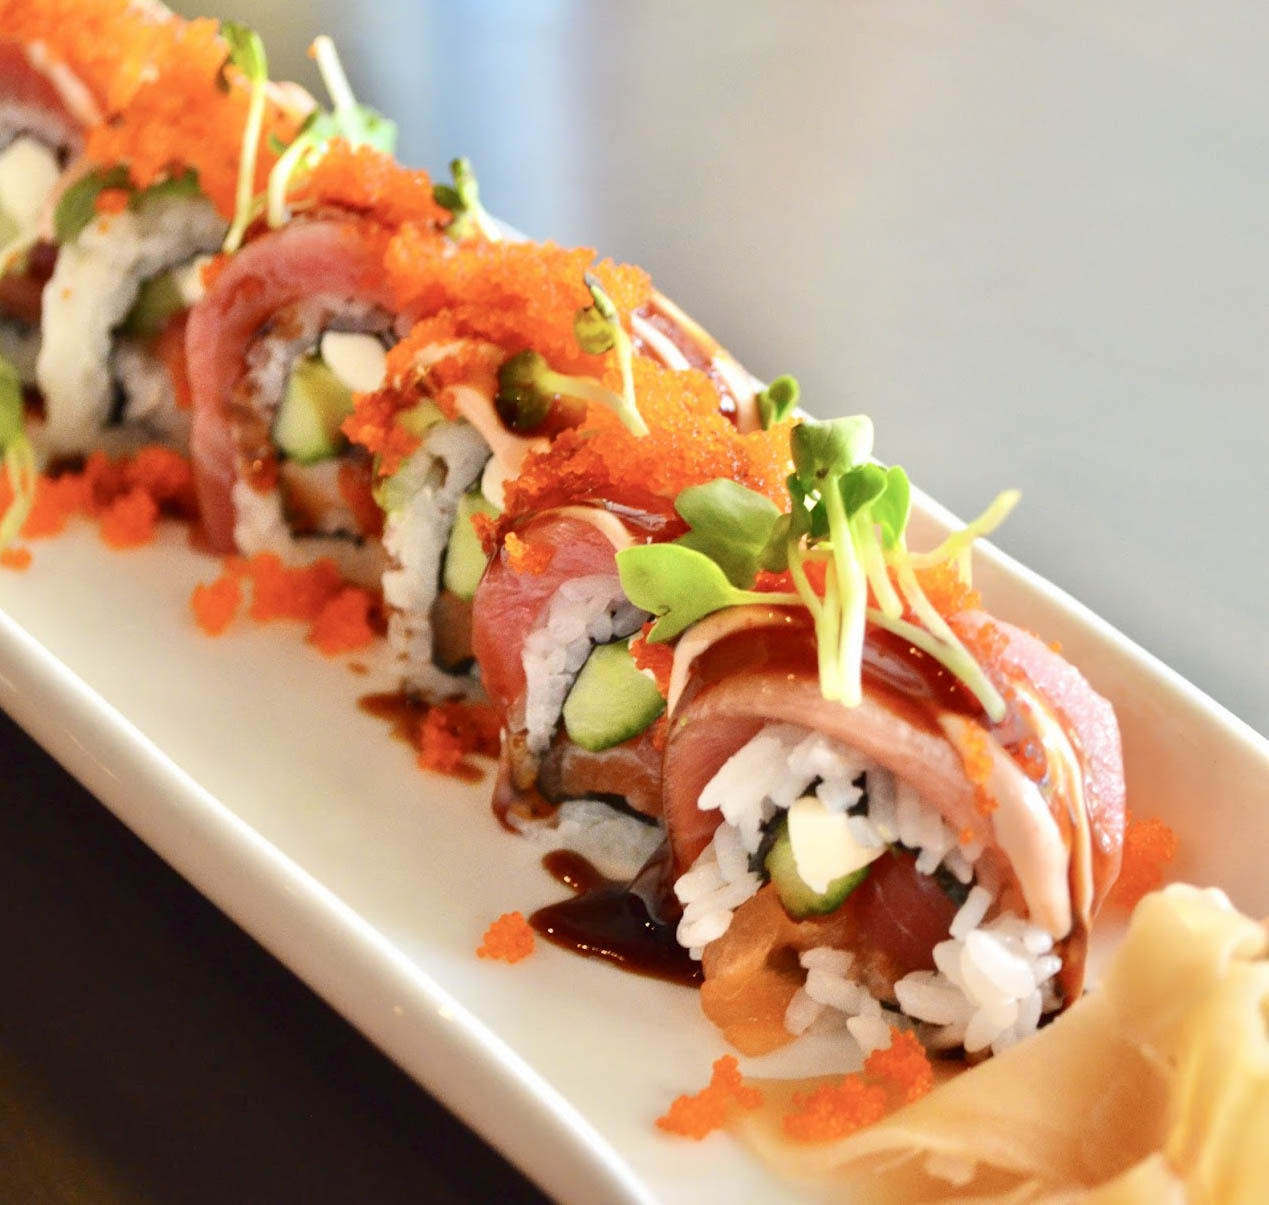 A sushi roll